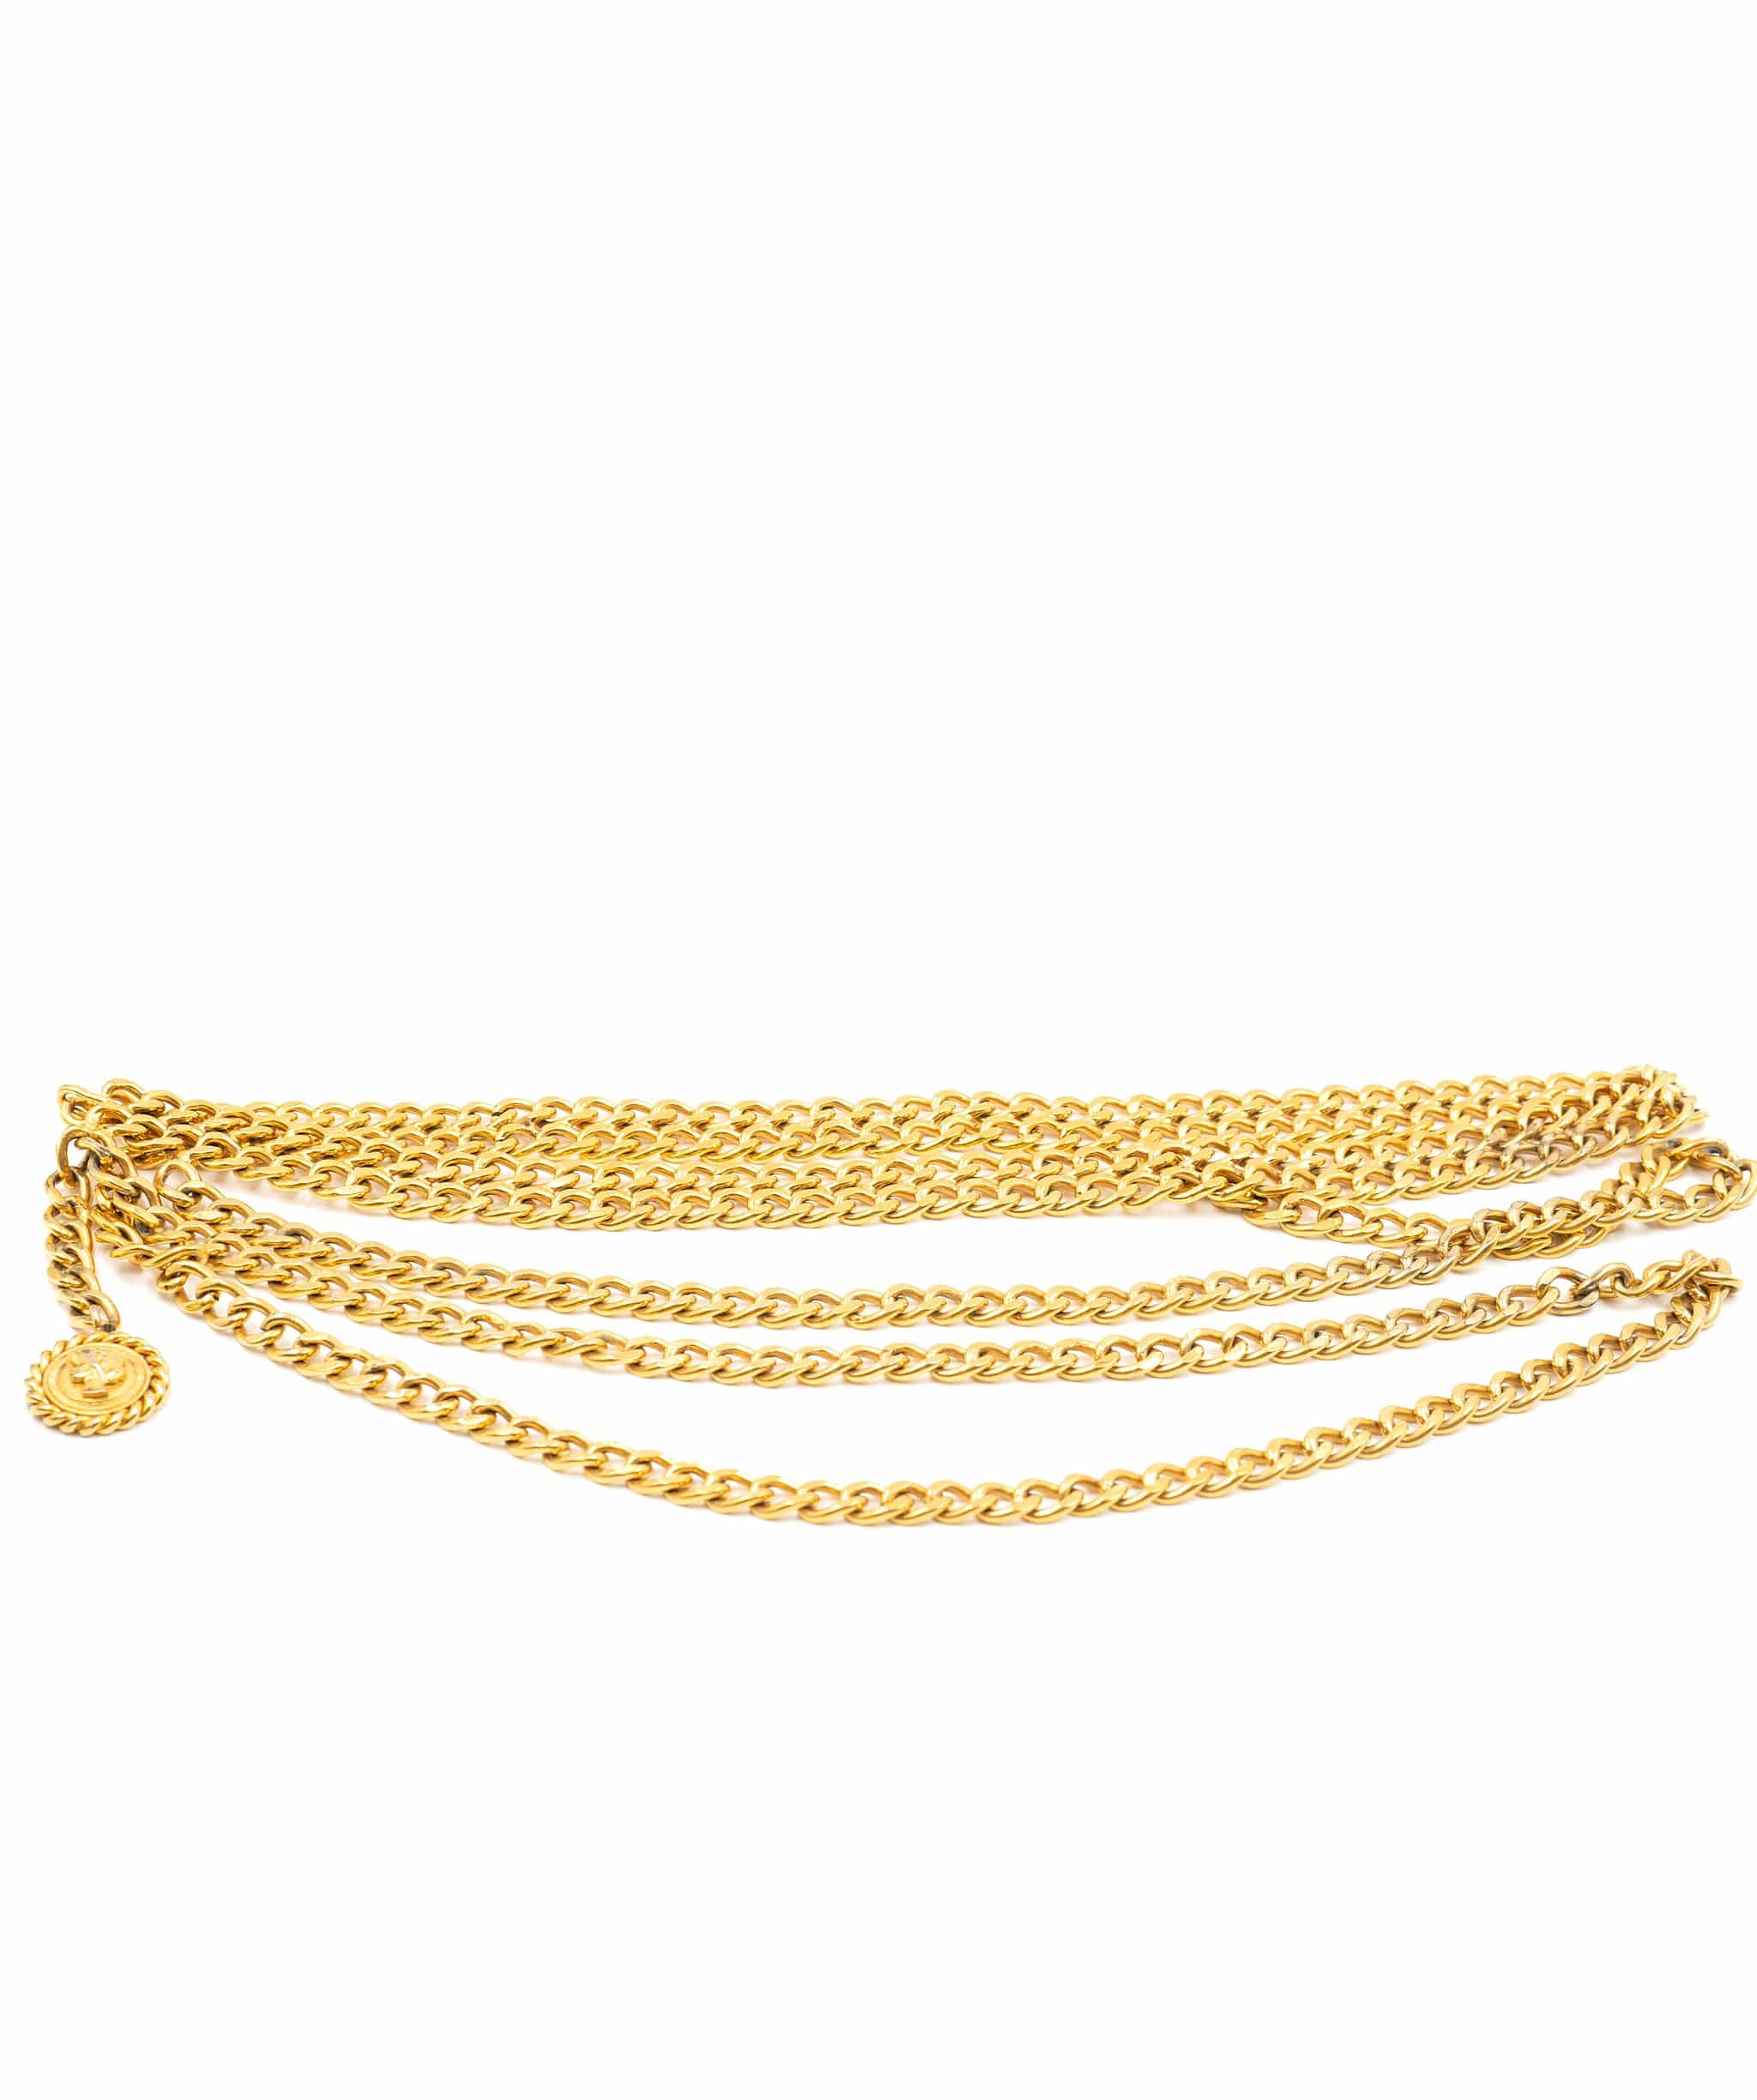 Chanel Chanel triple draped chain belt ASL4004